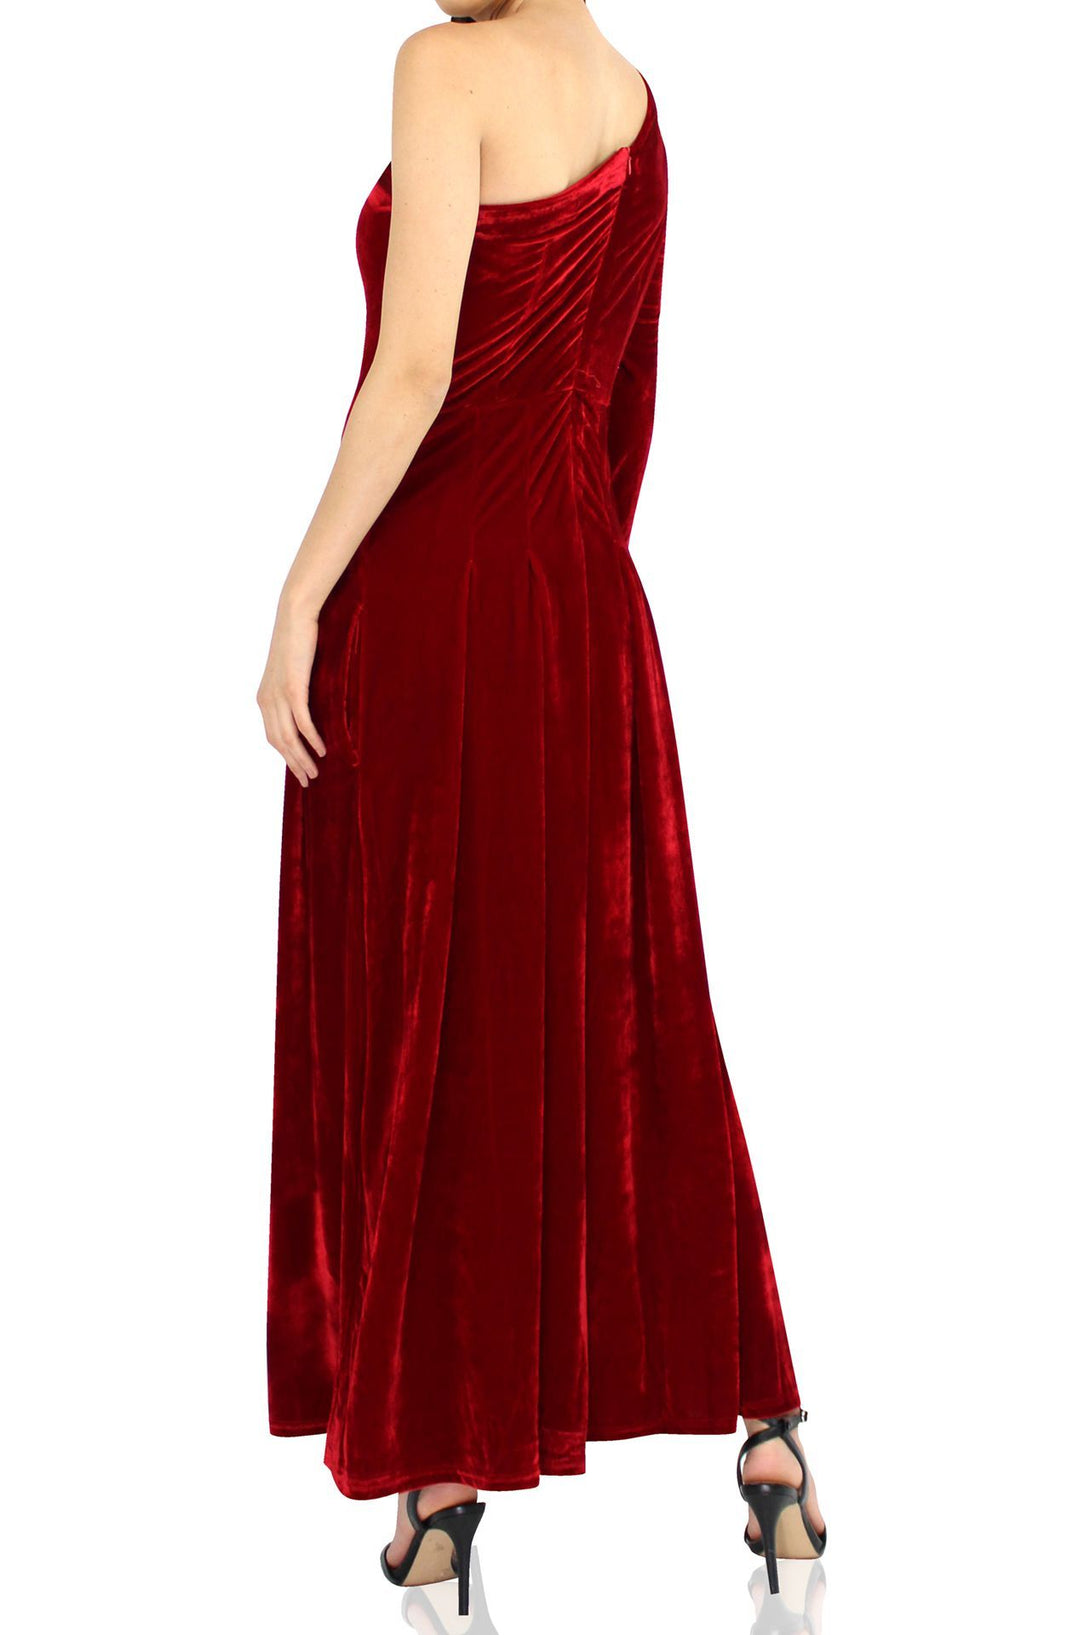 Womens-Designer-One-Shoulder-Long-Dress-In-Red-By-Kyle-Richard